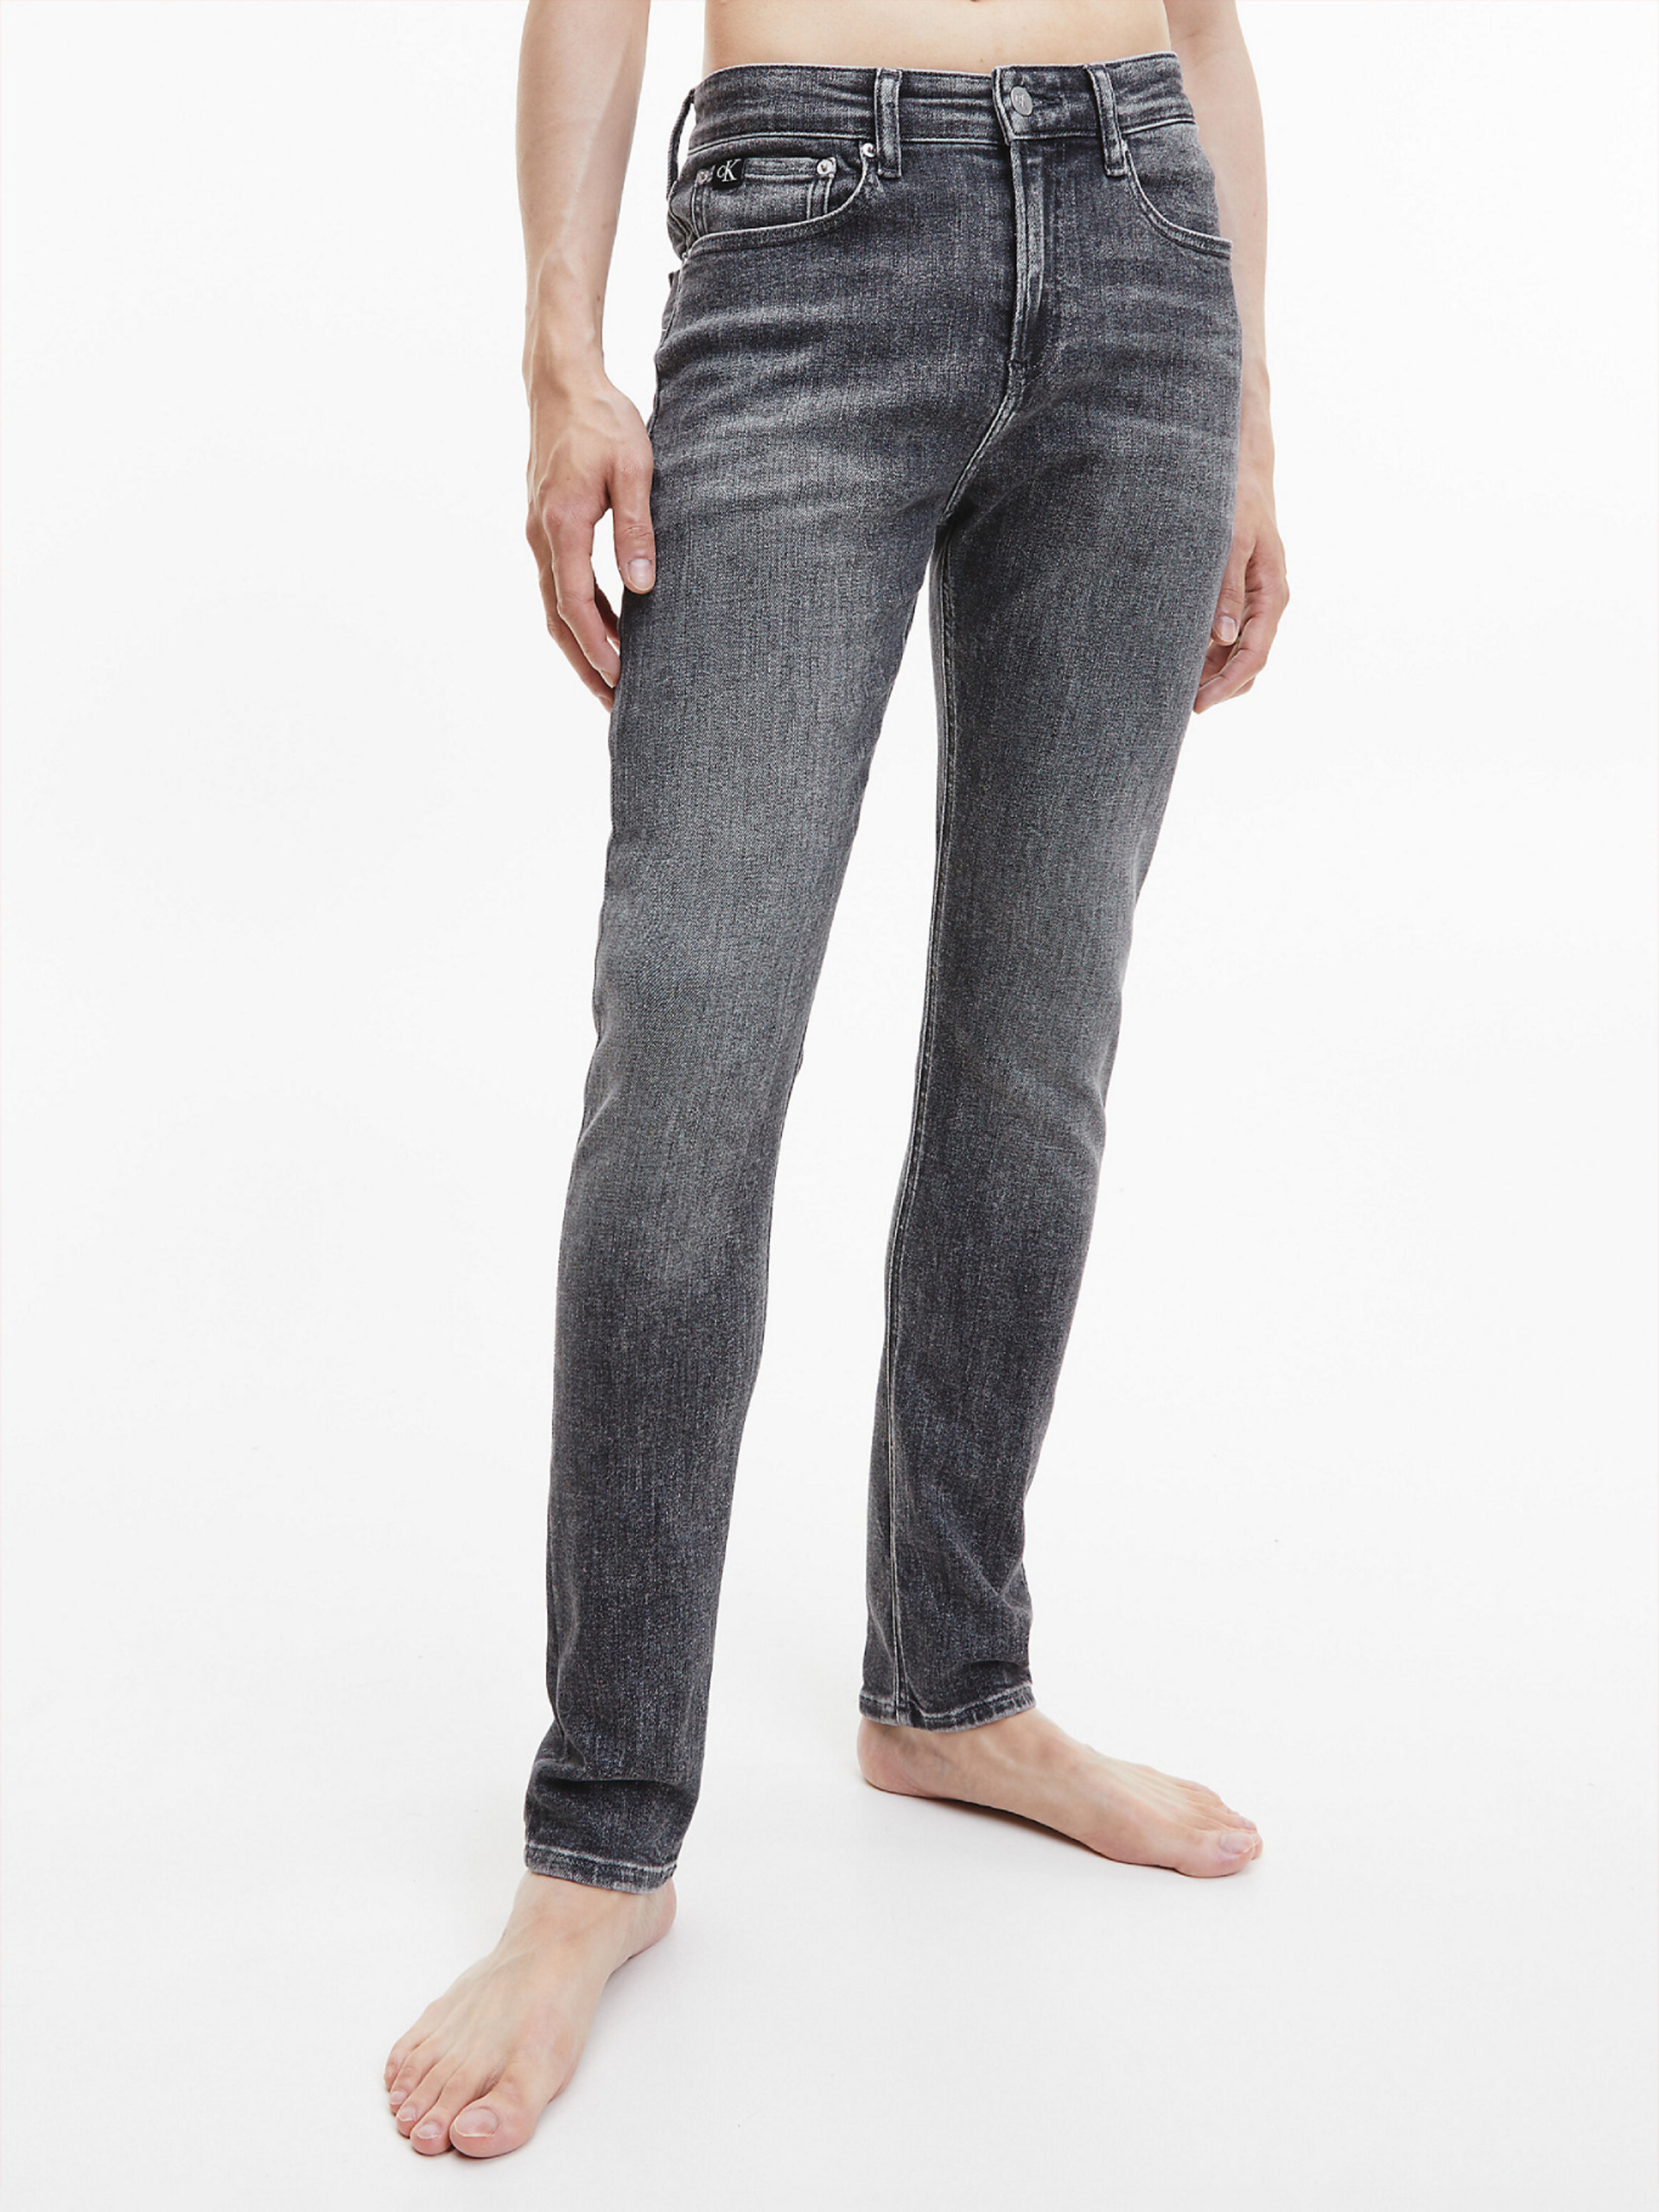 Calvin Klein pánské šedé džíny - 36/32 (1BZ)